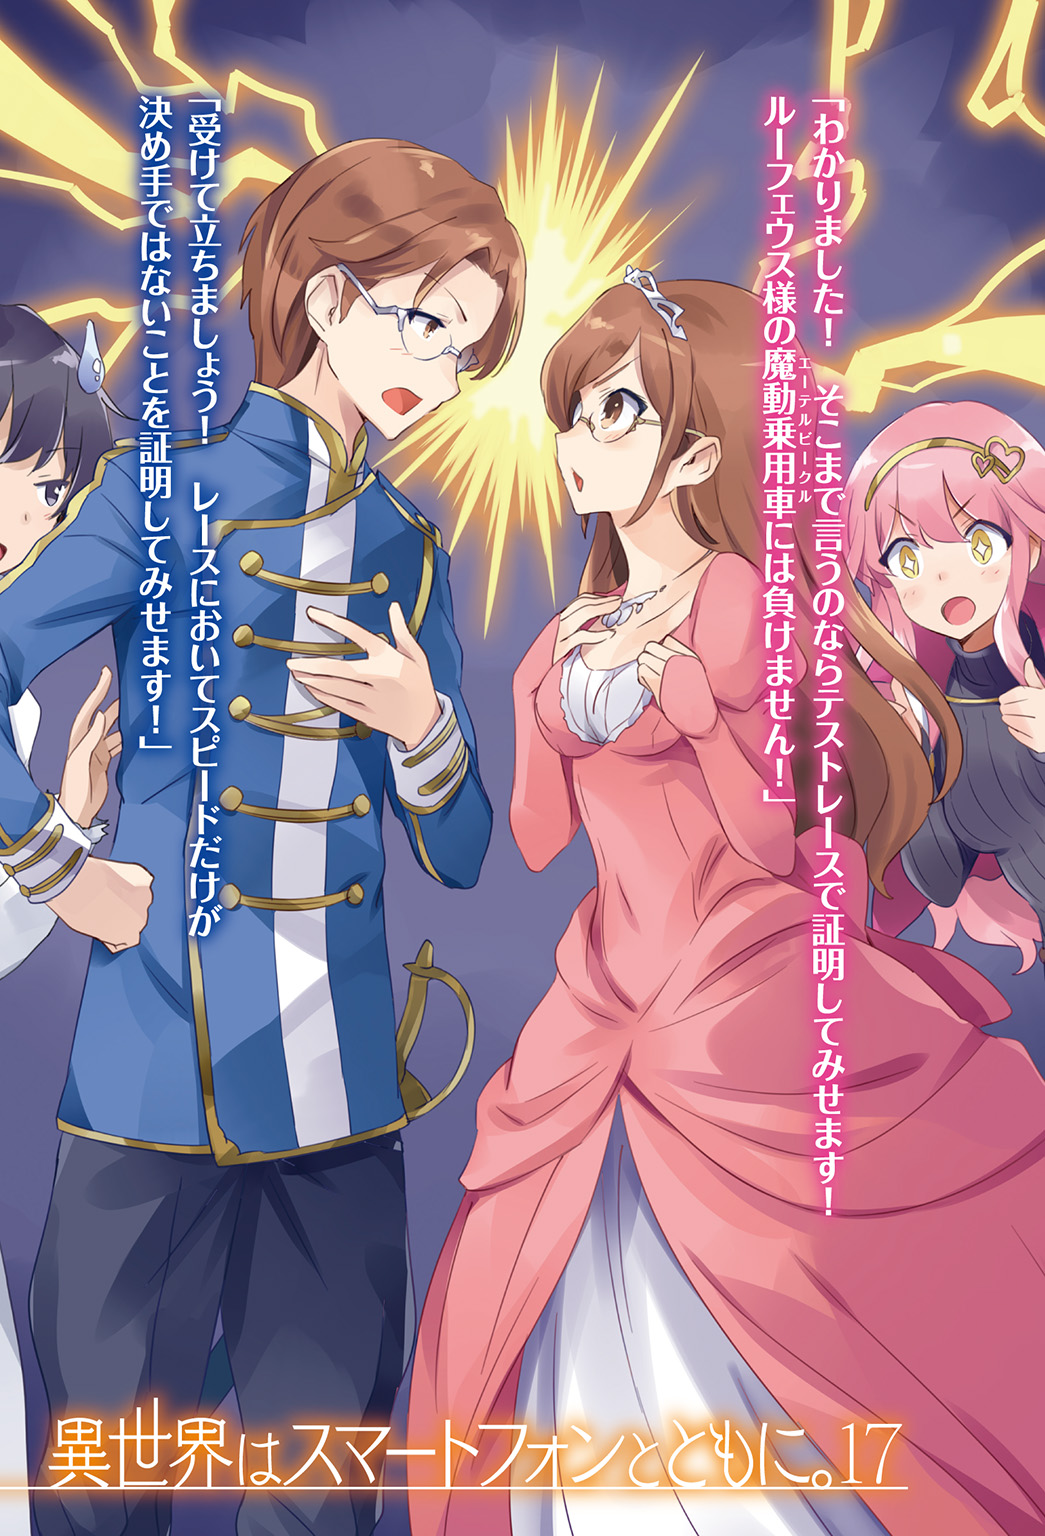 Brotaku - Isekai Wa Smartphone To Tomo Ni Season 2 Announced Link:    The official website for Patora Fuyuhara's Isekai wa Smartphone to Tomo ni.  (In Another World With My